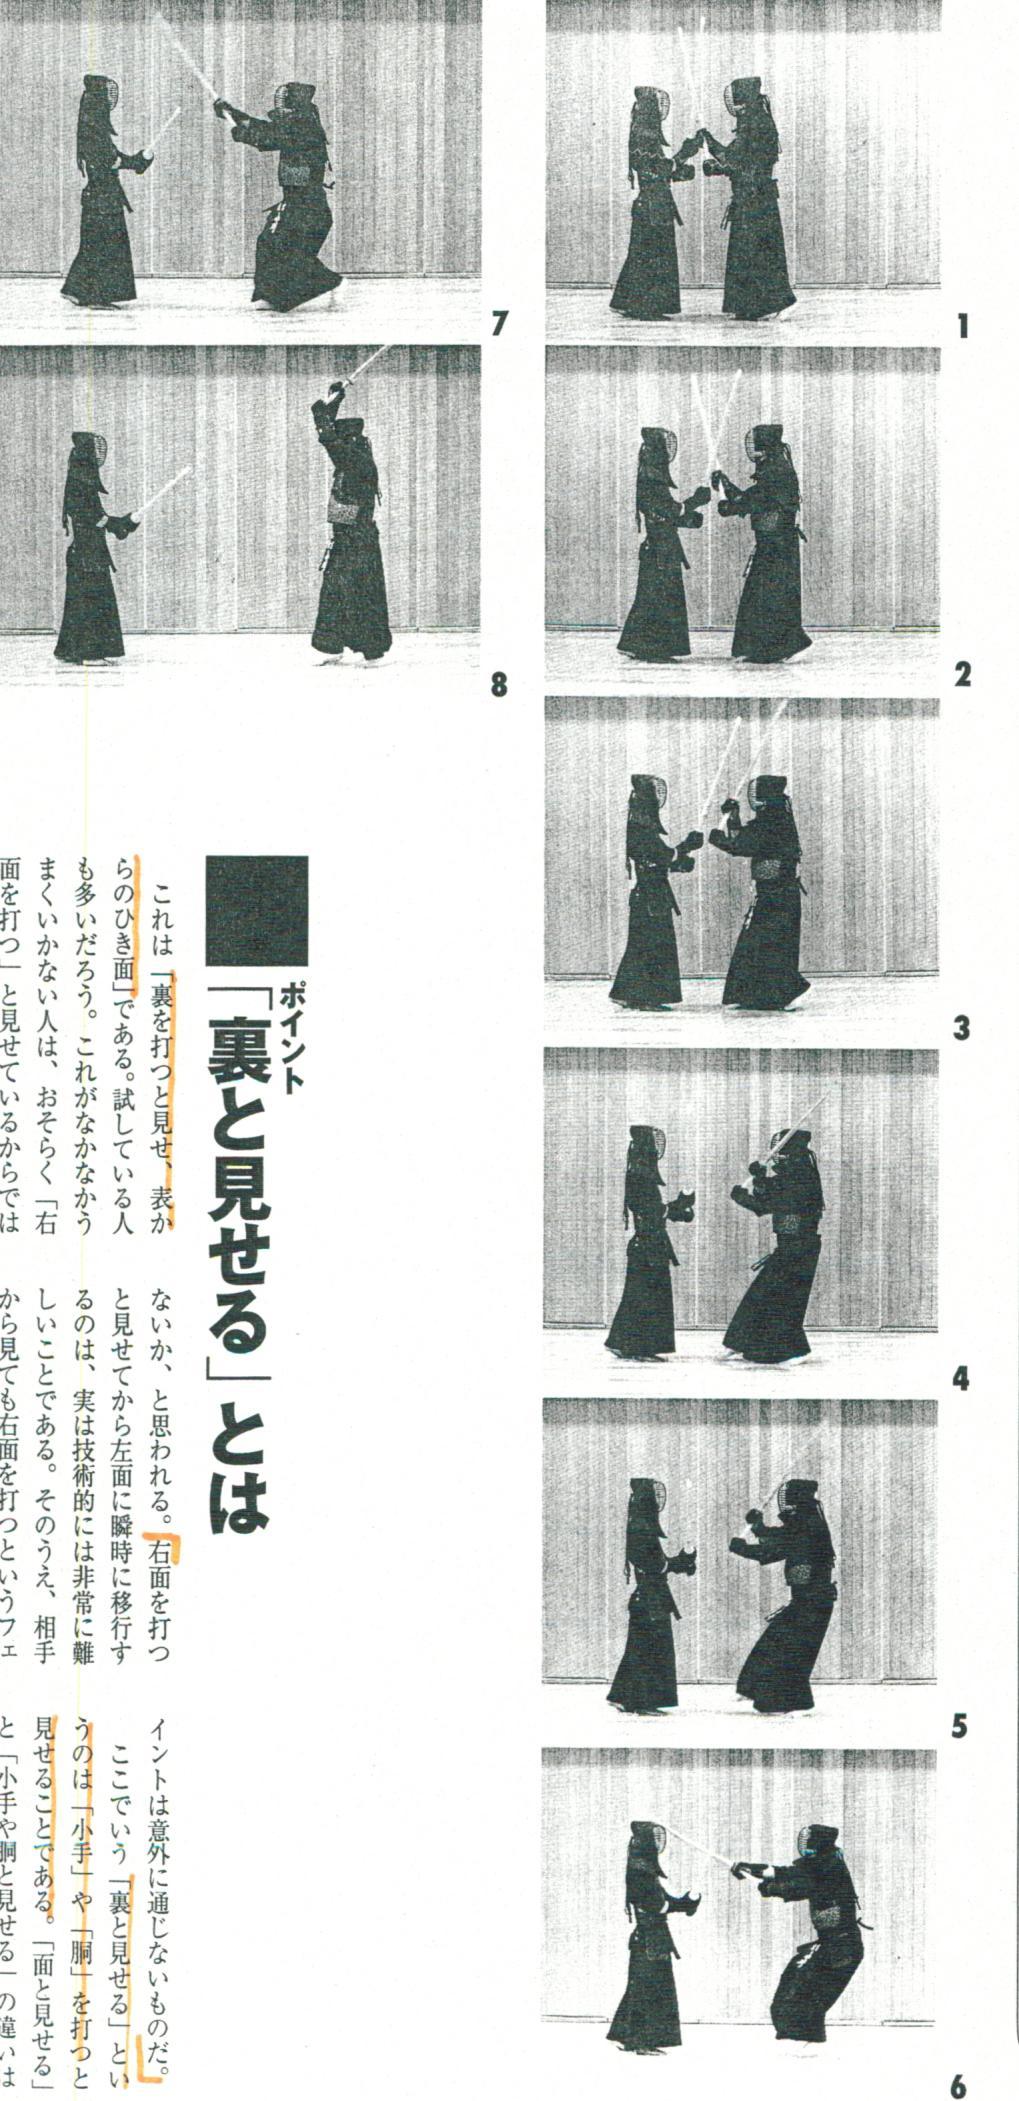 KENDO CLASSROOM ( 剣道教室 ) for Wining Kendo Waza Tsubazeriai Page 4 of 9 Hiki Men ( 引き面 ) from Tsubazeriai ( つばぜり合い ) CASE 3 Hiki Men ( 引き面 ) CASE 3 (Hiki Men from Omote side by feinting Kote/Dō) Tip 1